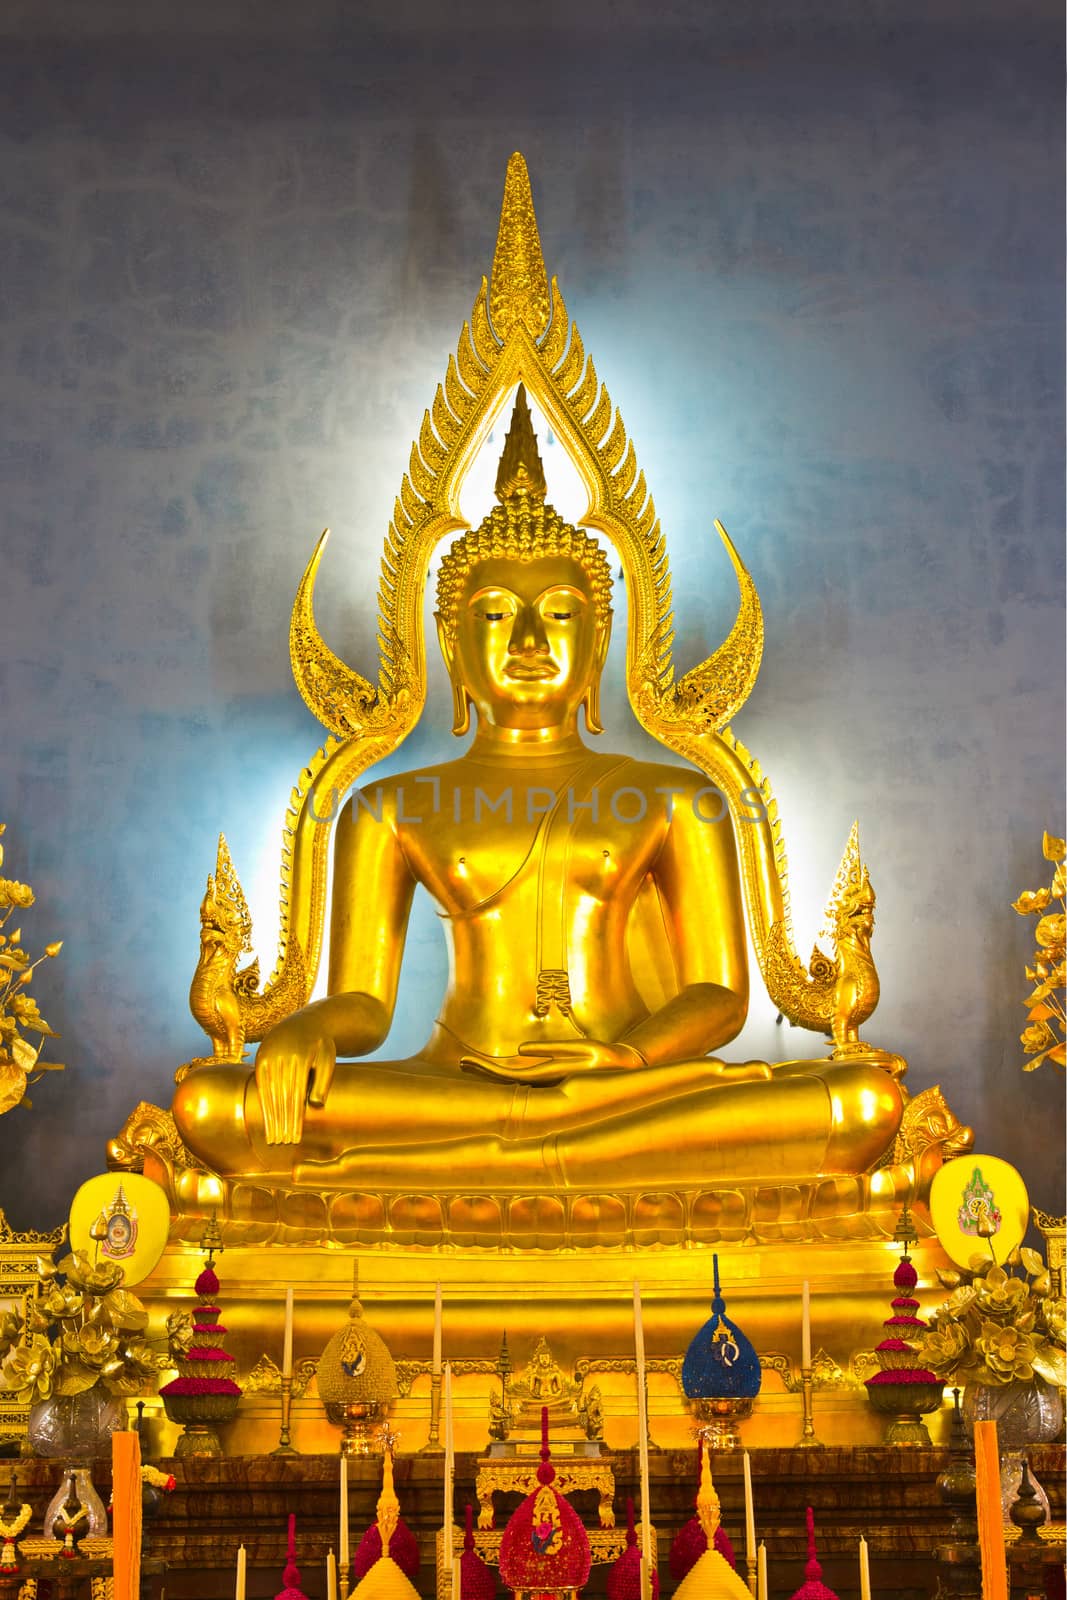 Buddha image by narinbg